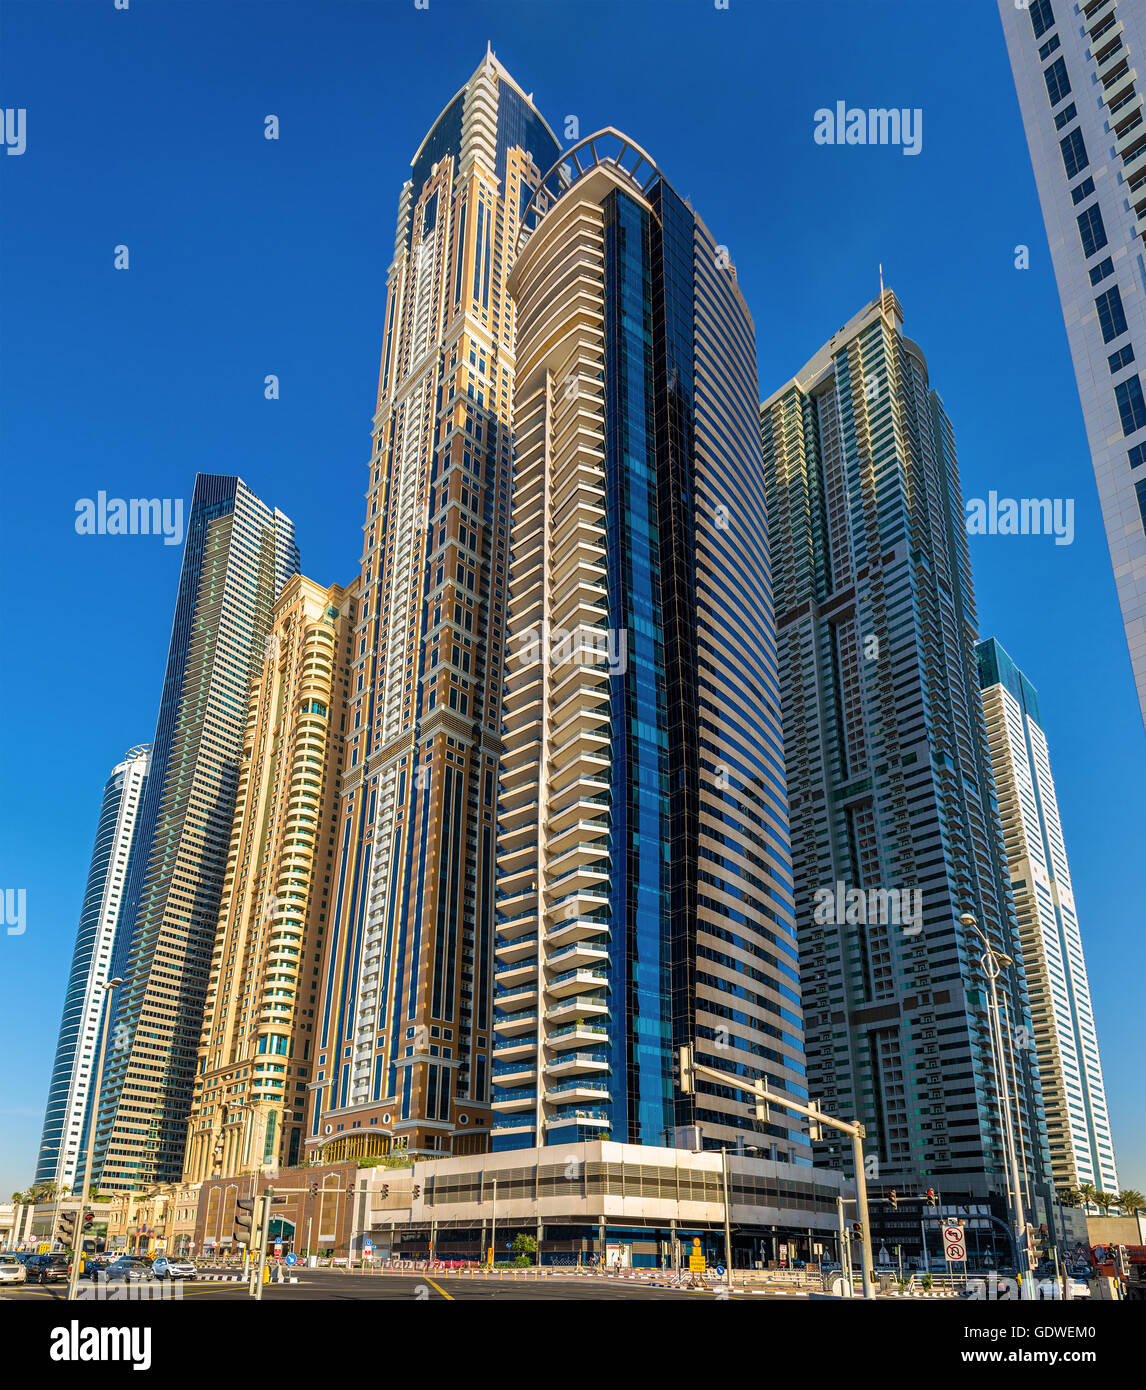 Skyscrapers in the World's Tallest Tower Block - Jumeirah, Dubai Stock Photo